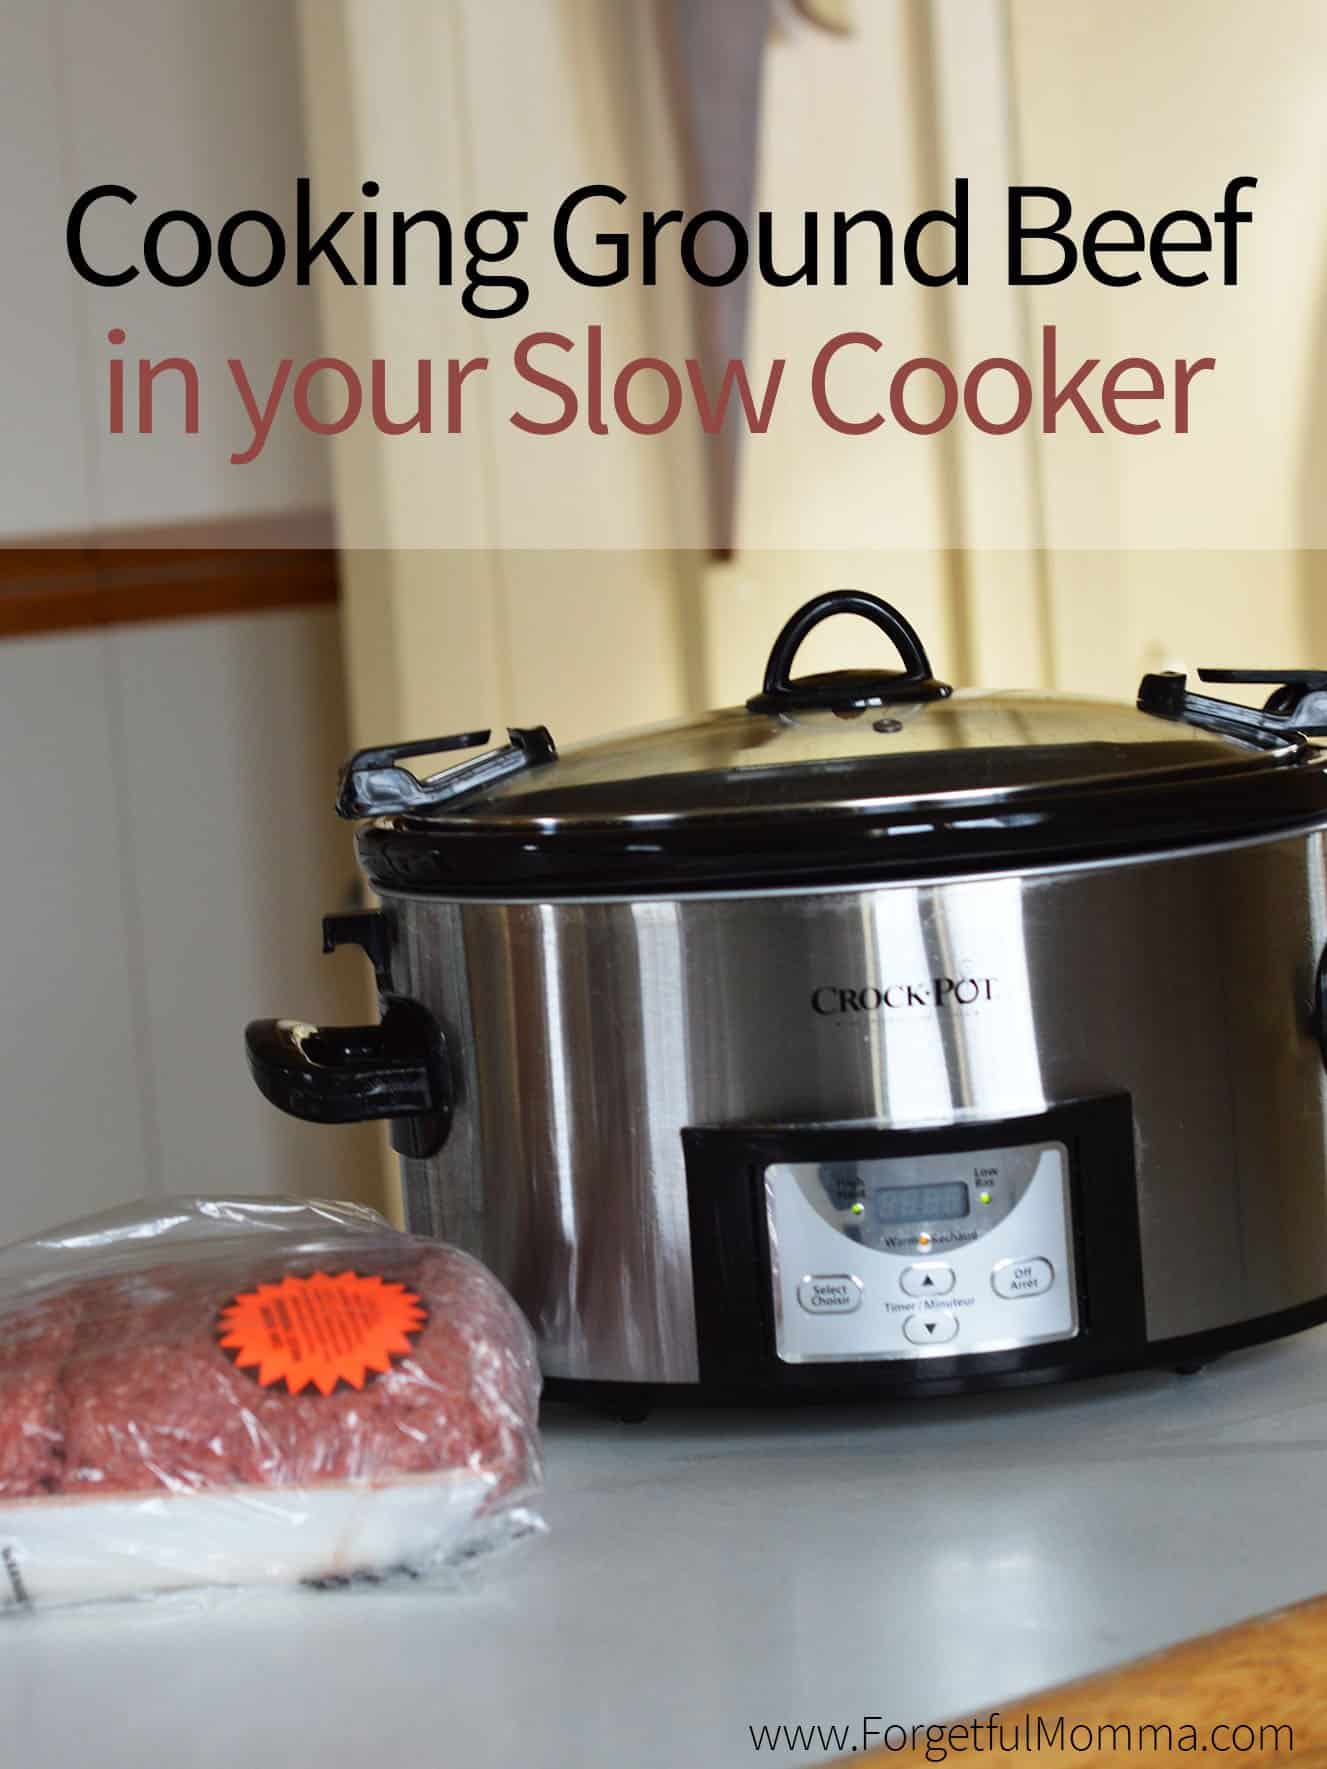 cookingground beef in your slow cooker